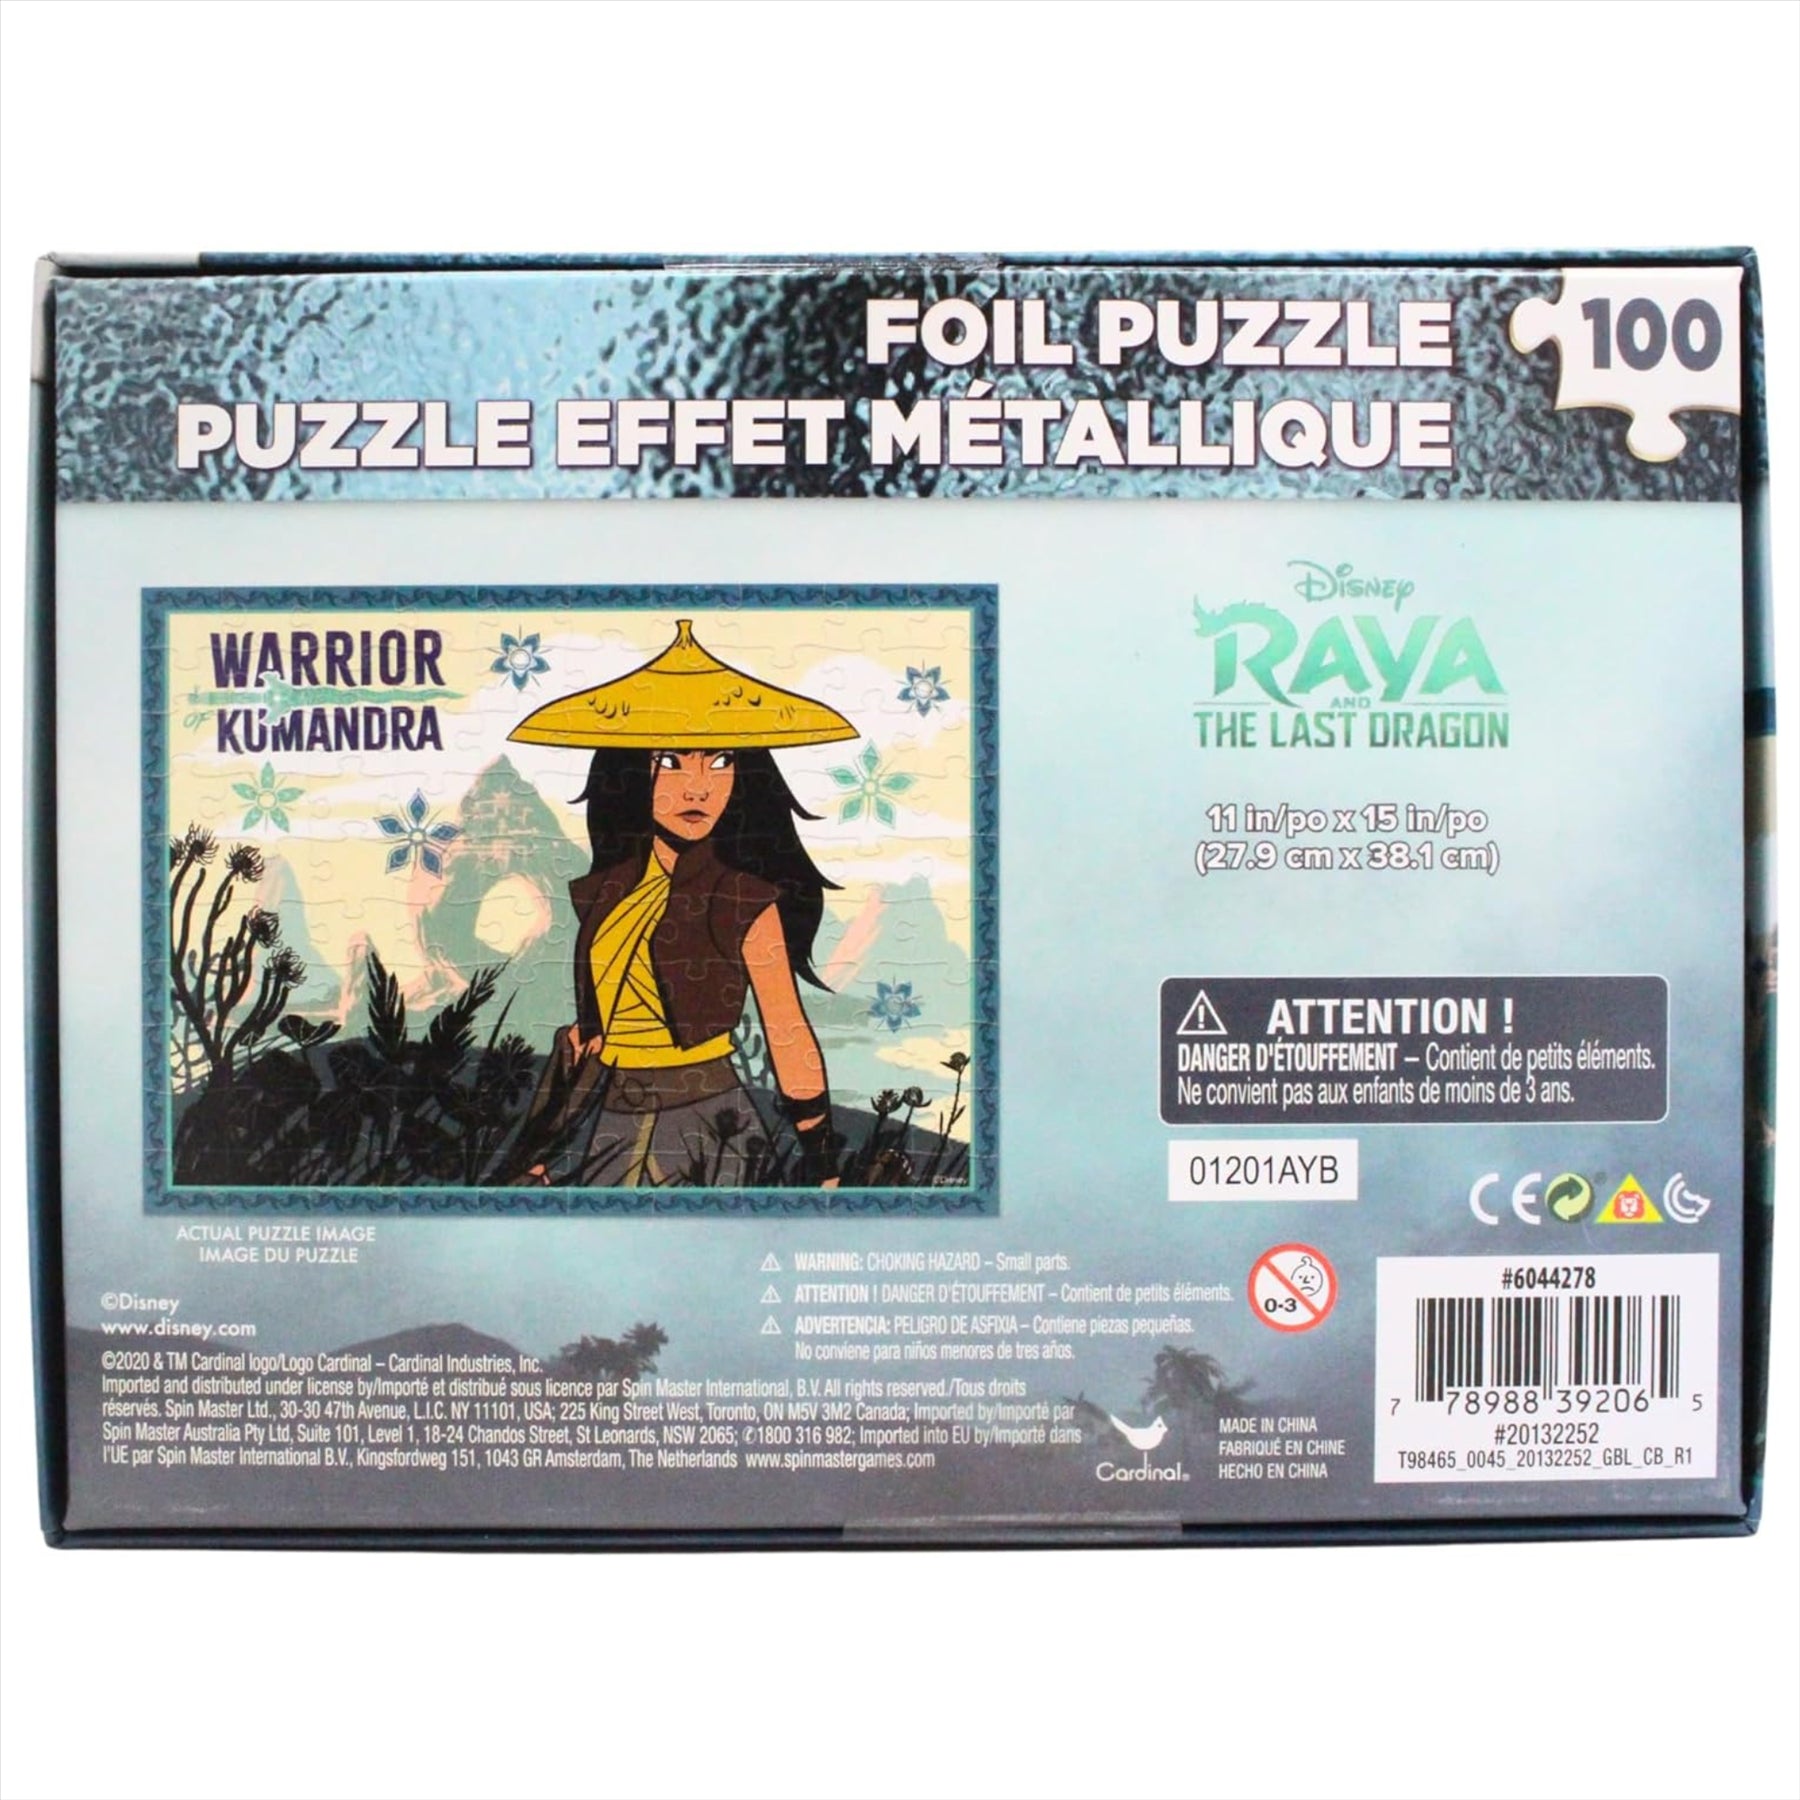 Disney and Dreamworks 248 Piece Foil Jigsaw Puzzle Bundle - Soul, Raya, and Trolls - Toptoys2u